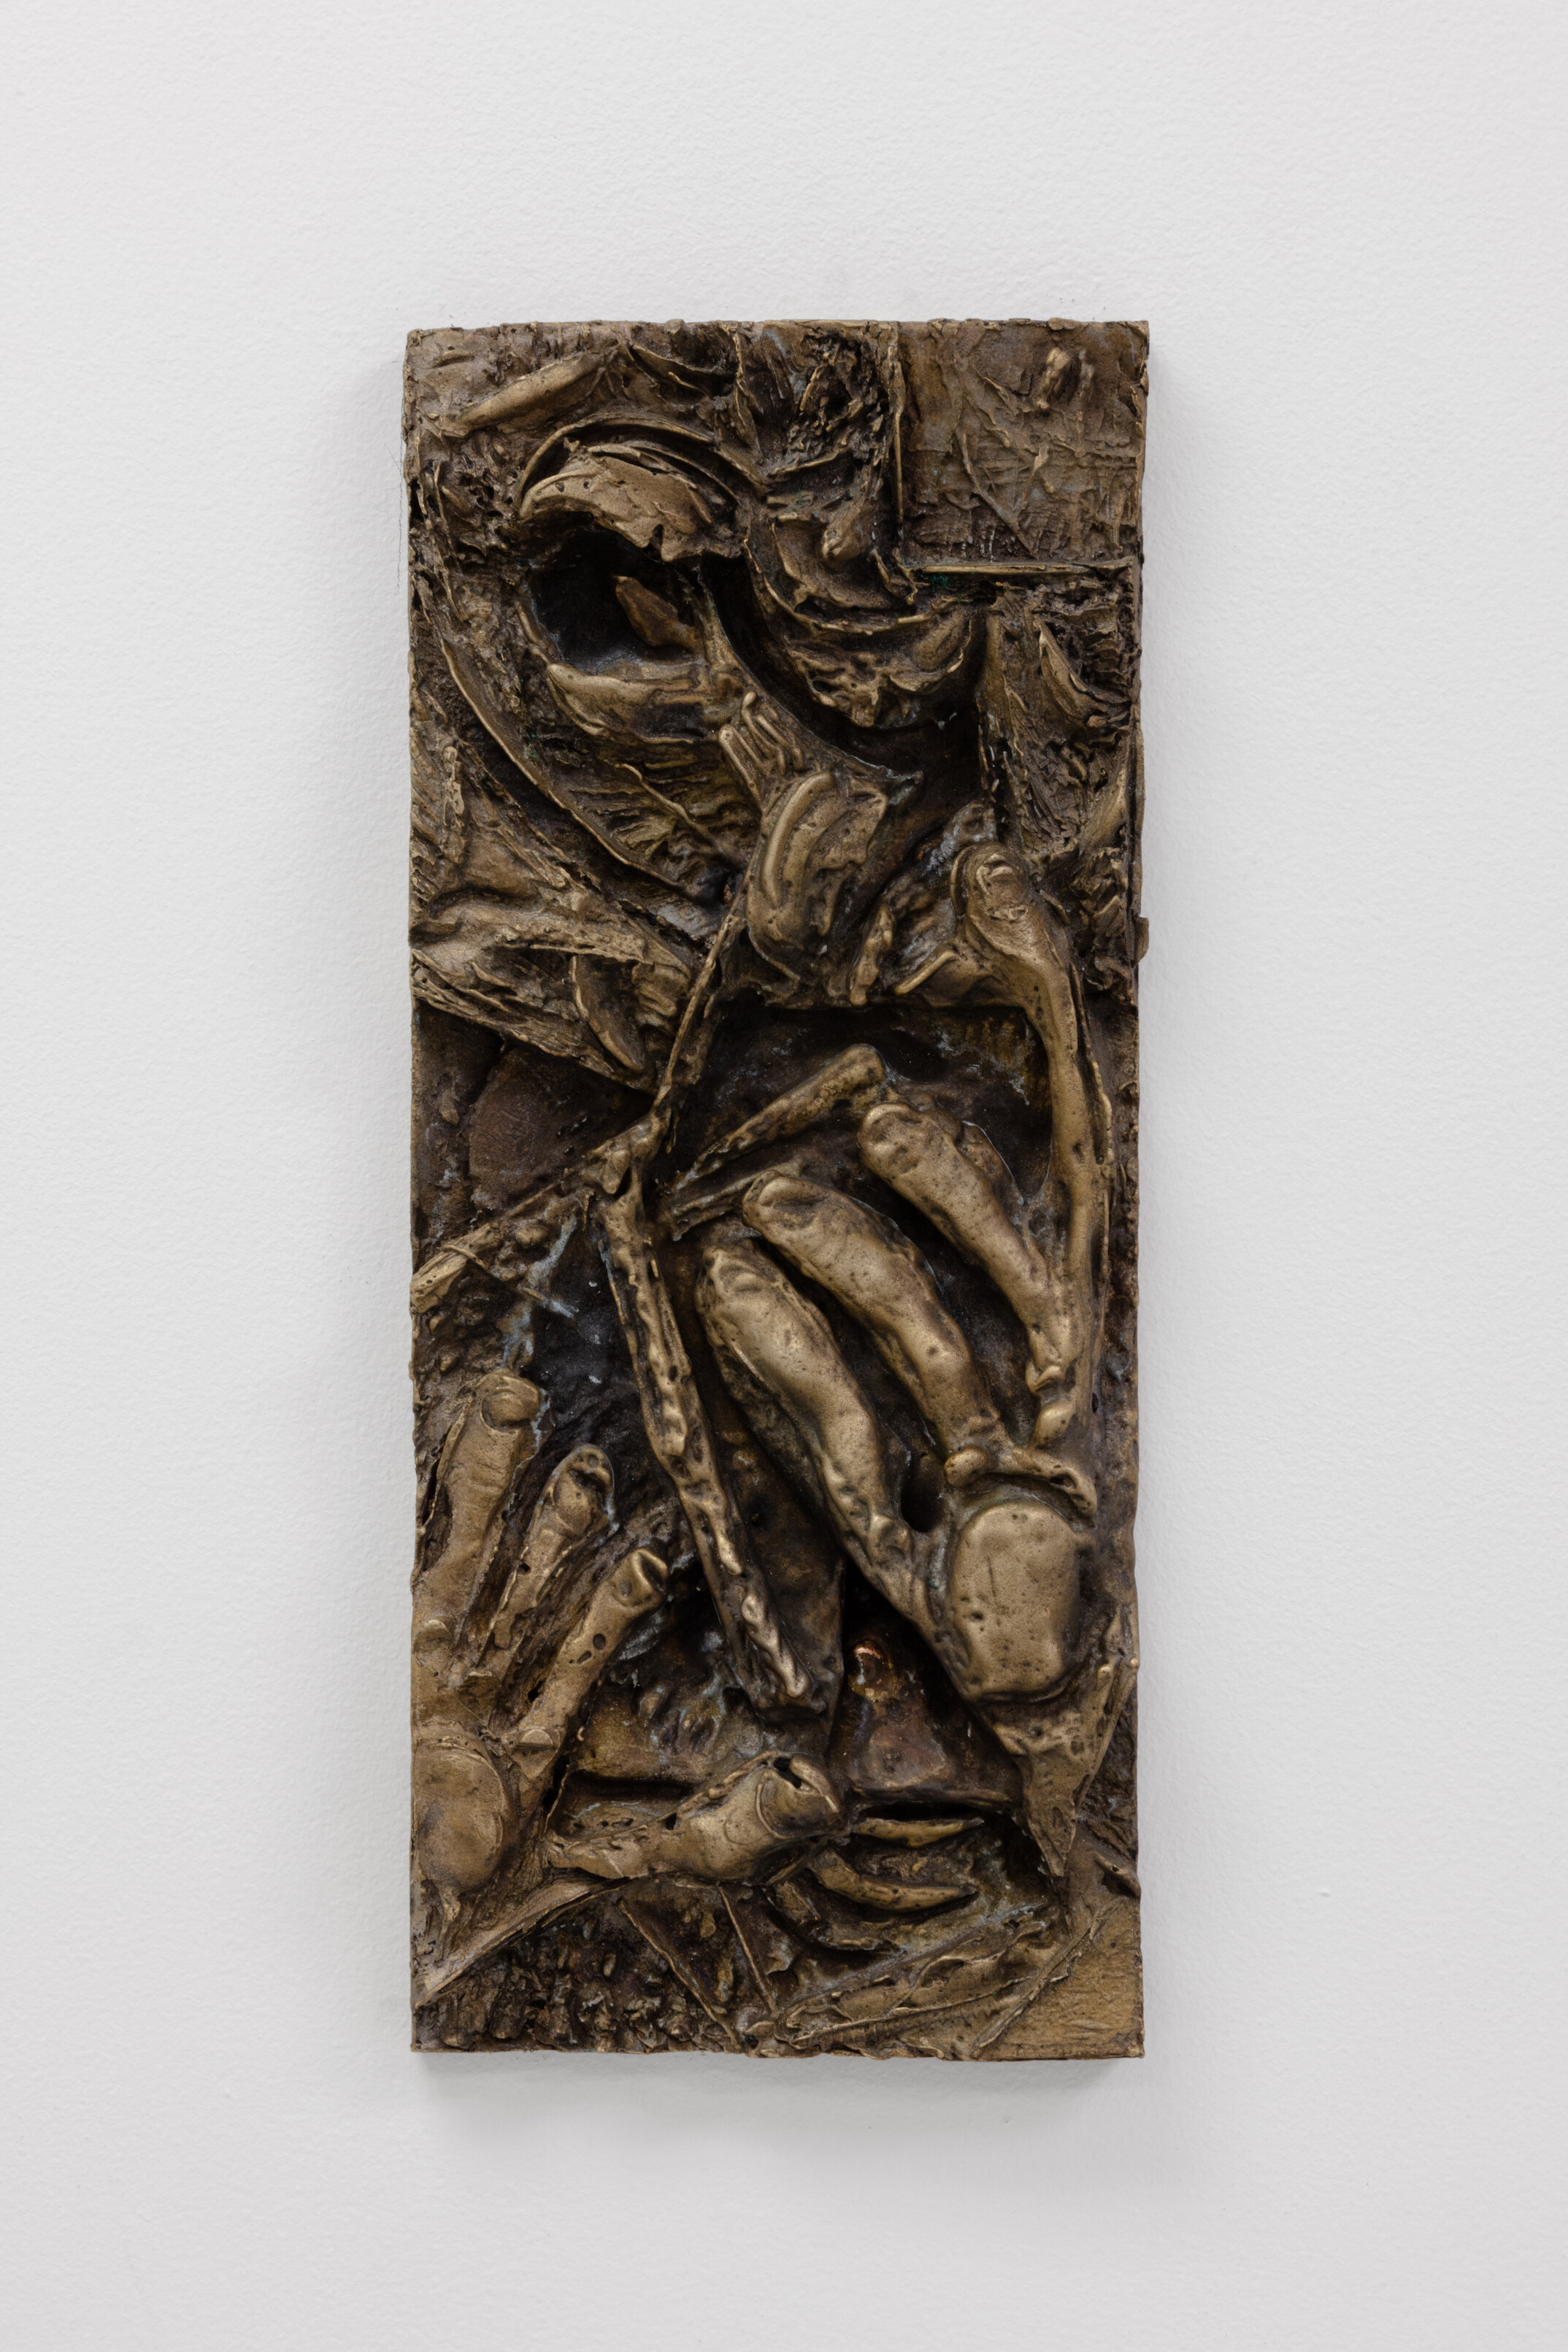  Martin Chramosta, Vogelsang, 2019, bronze, 34 x 14 cm 